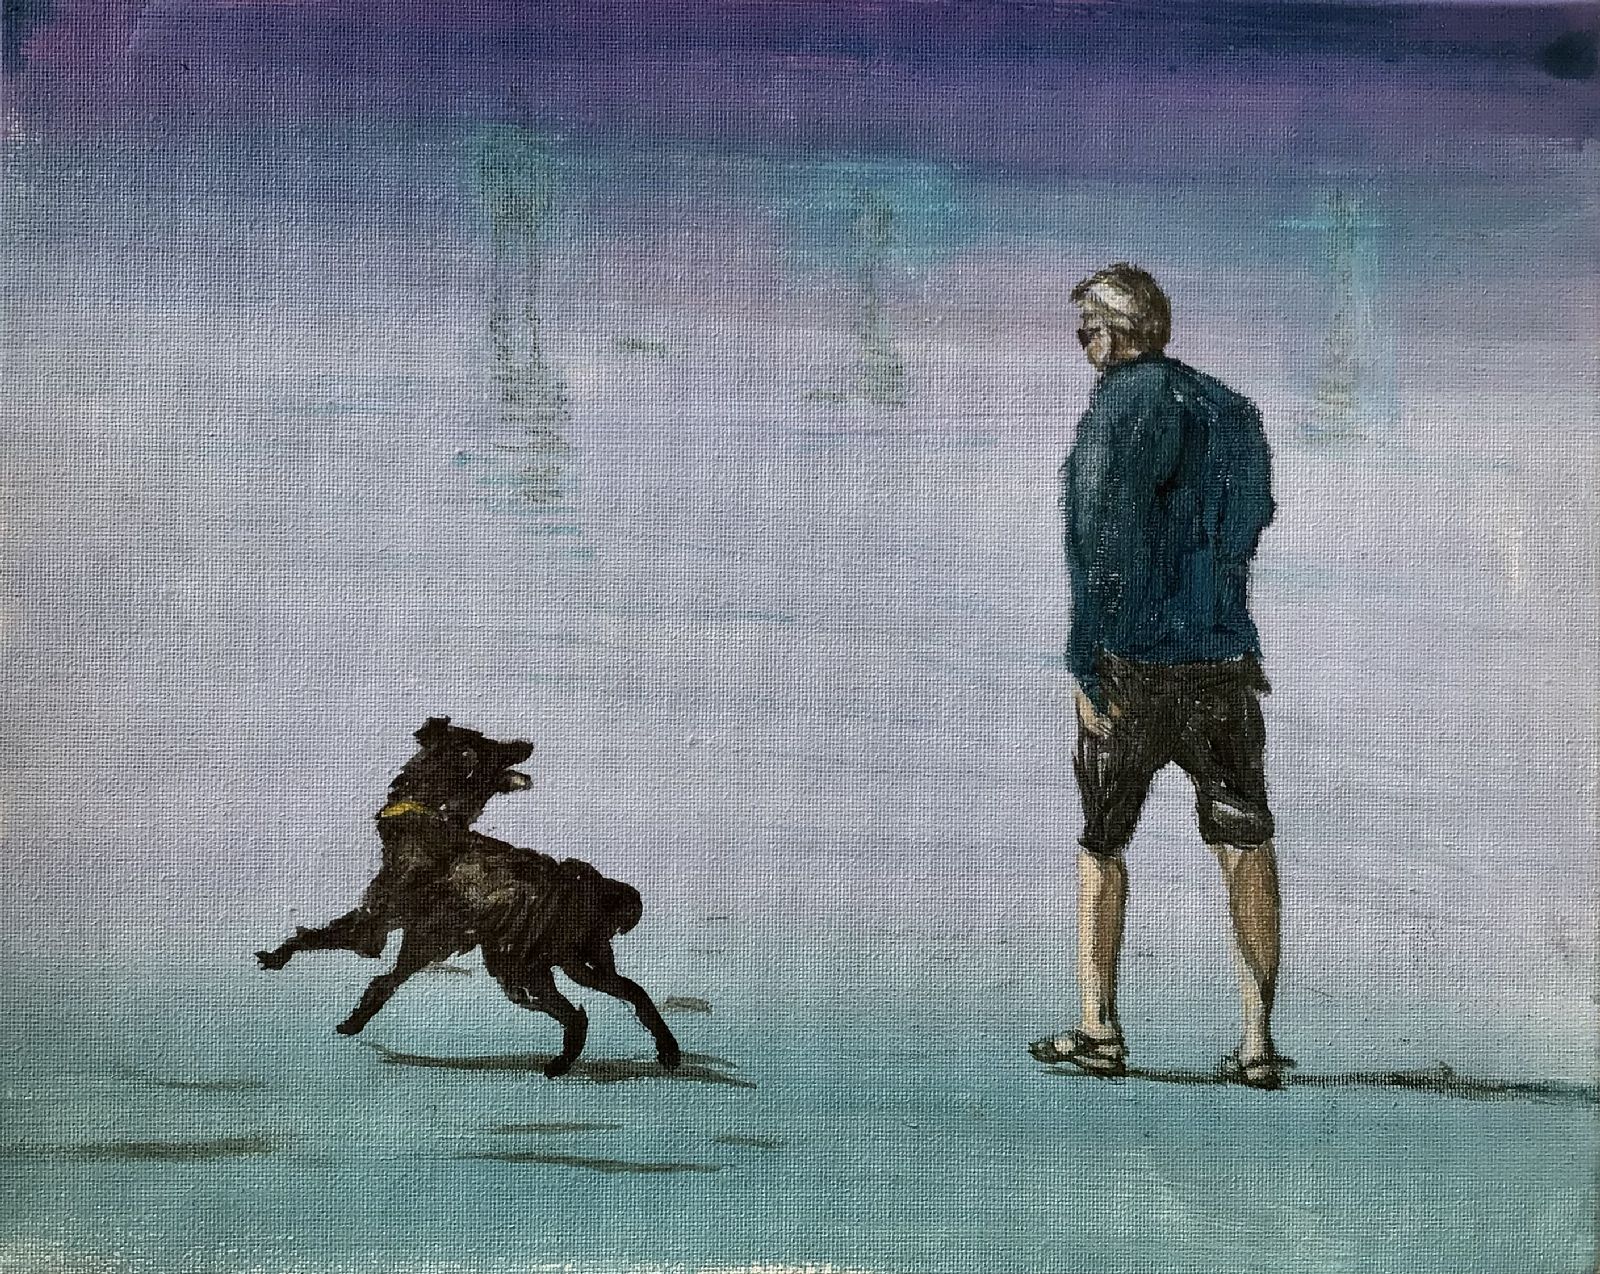 Dog Walker by Christopher Banahan